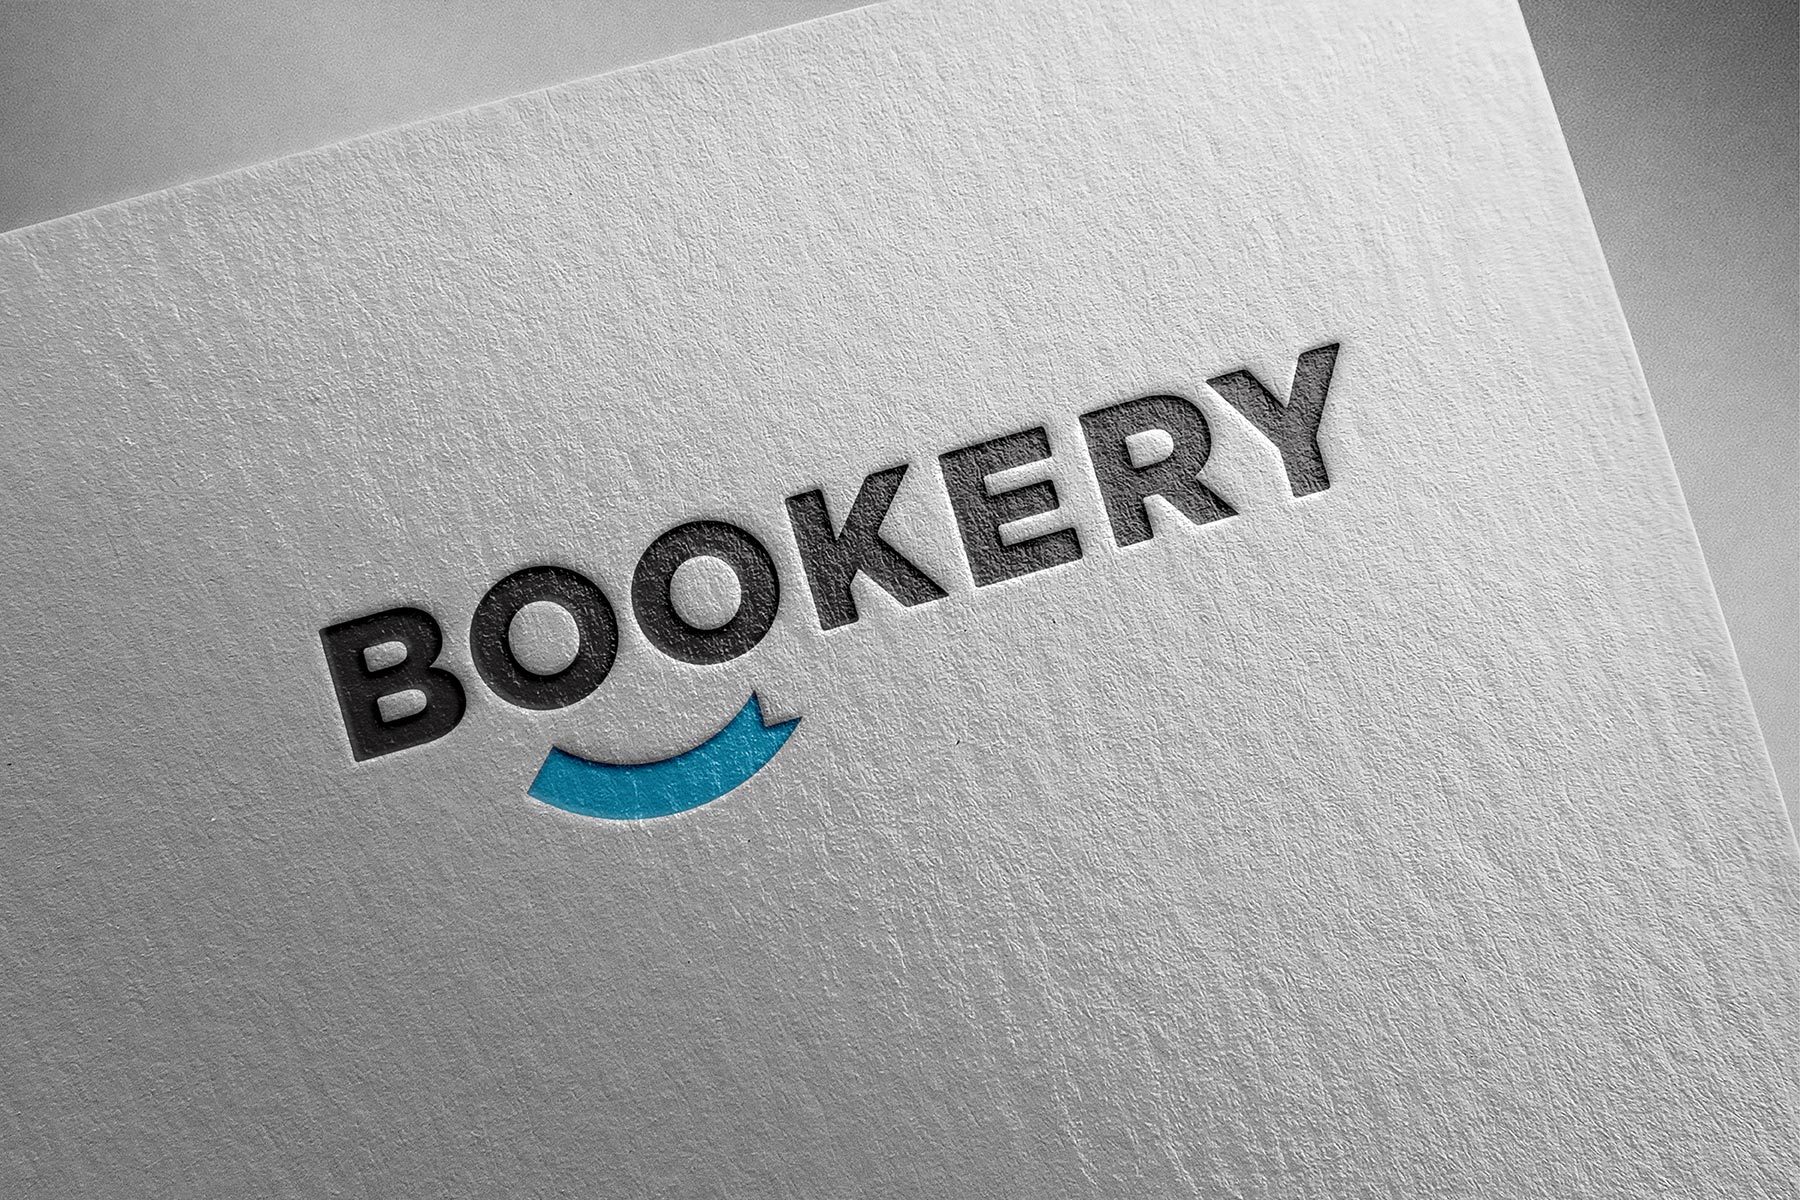 Bookery branding